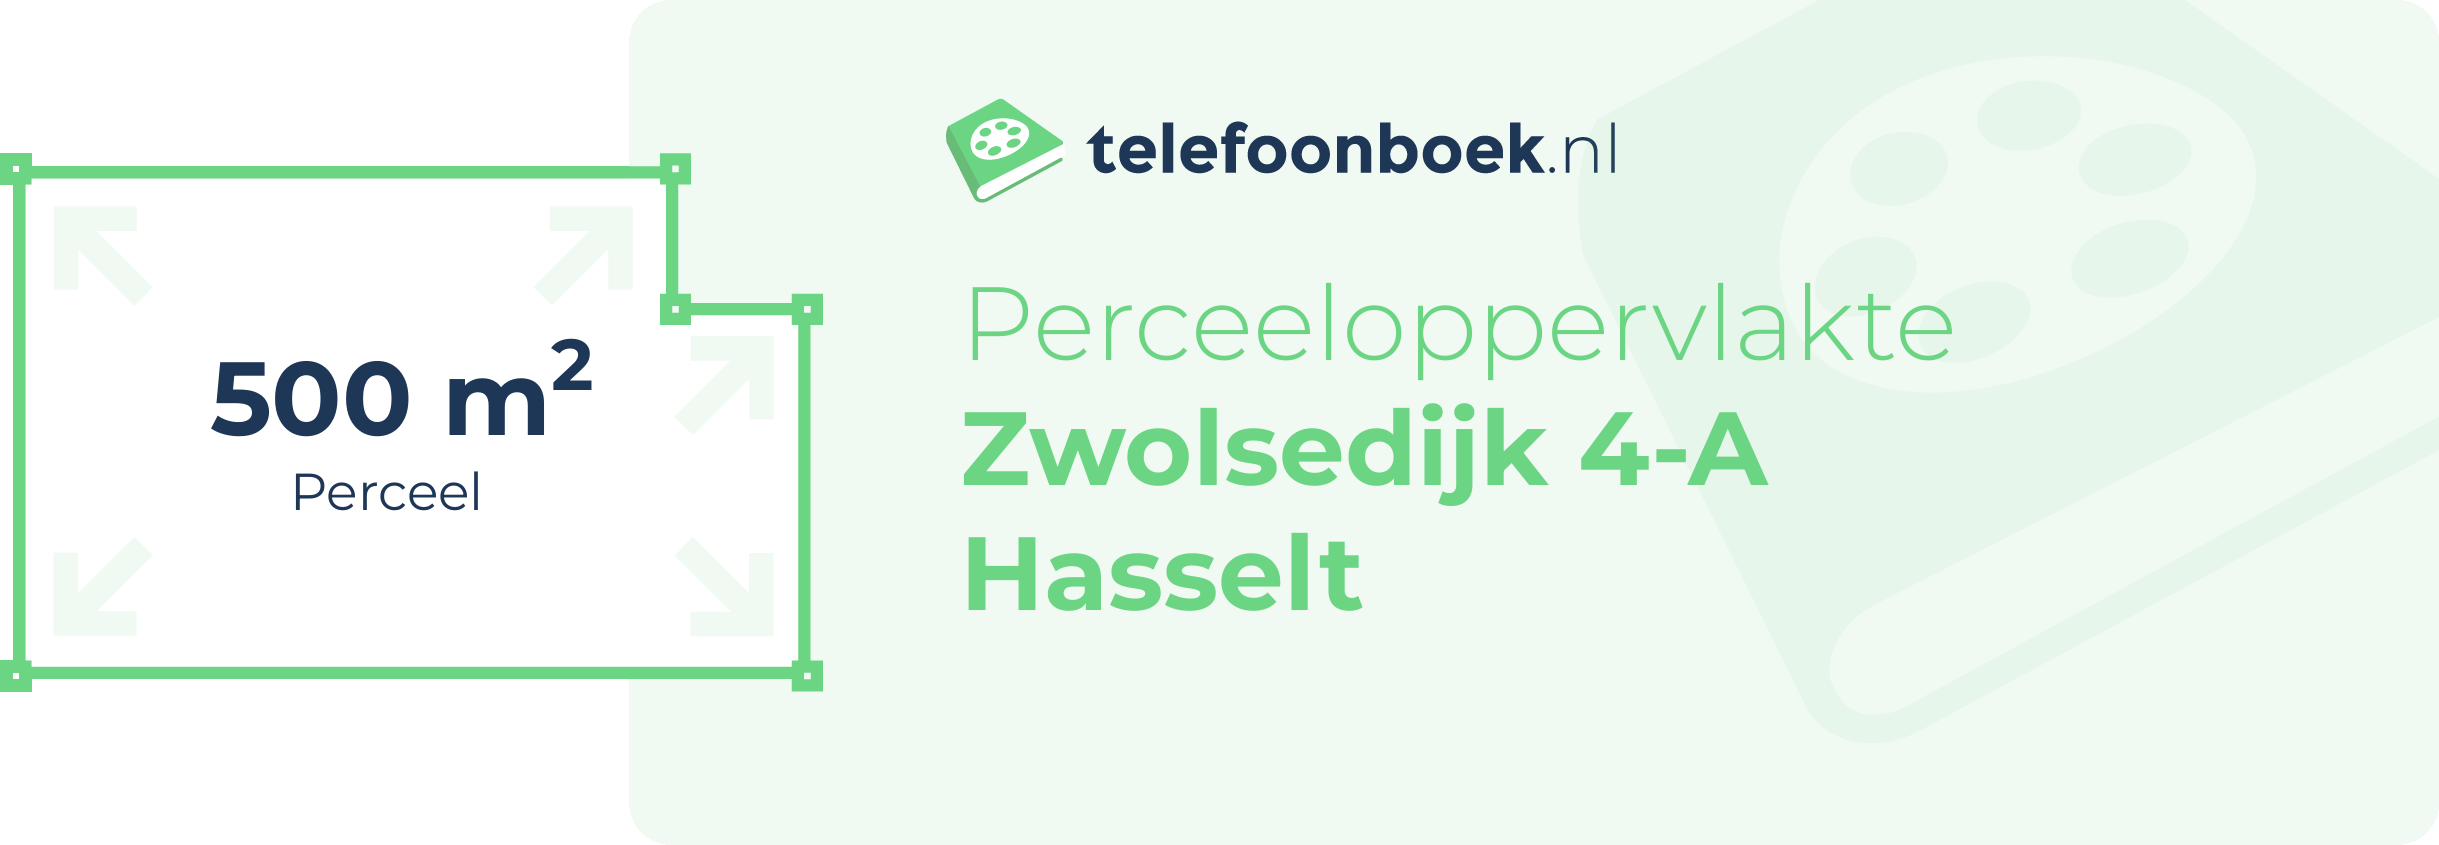 Perceeloppervlakte Zwolsedijk 4-A Hasselt